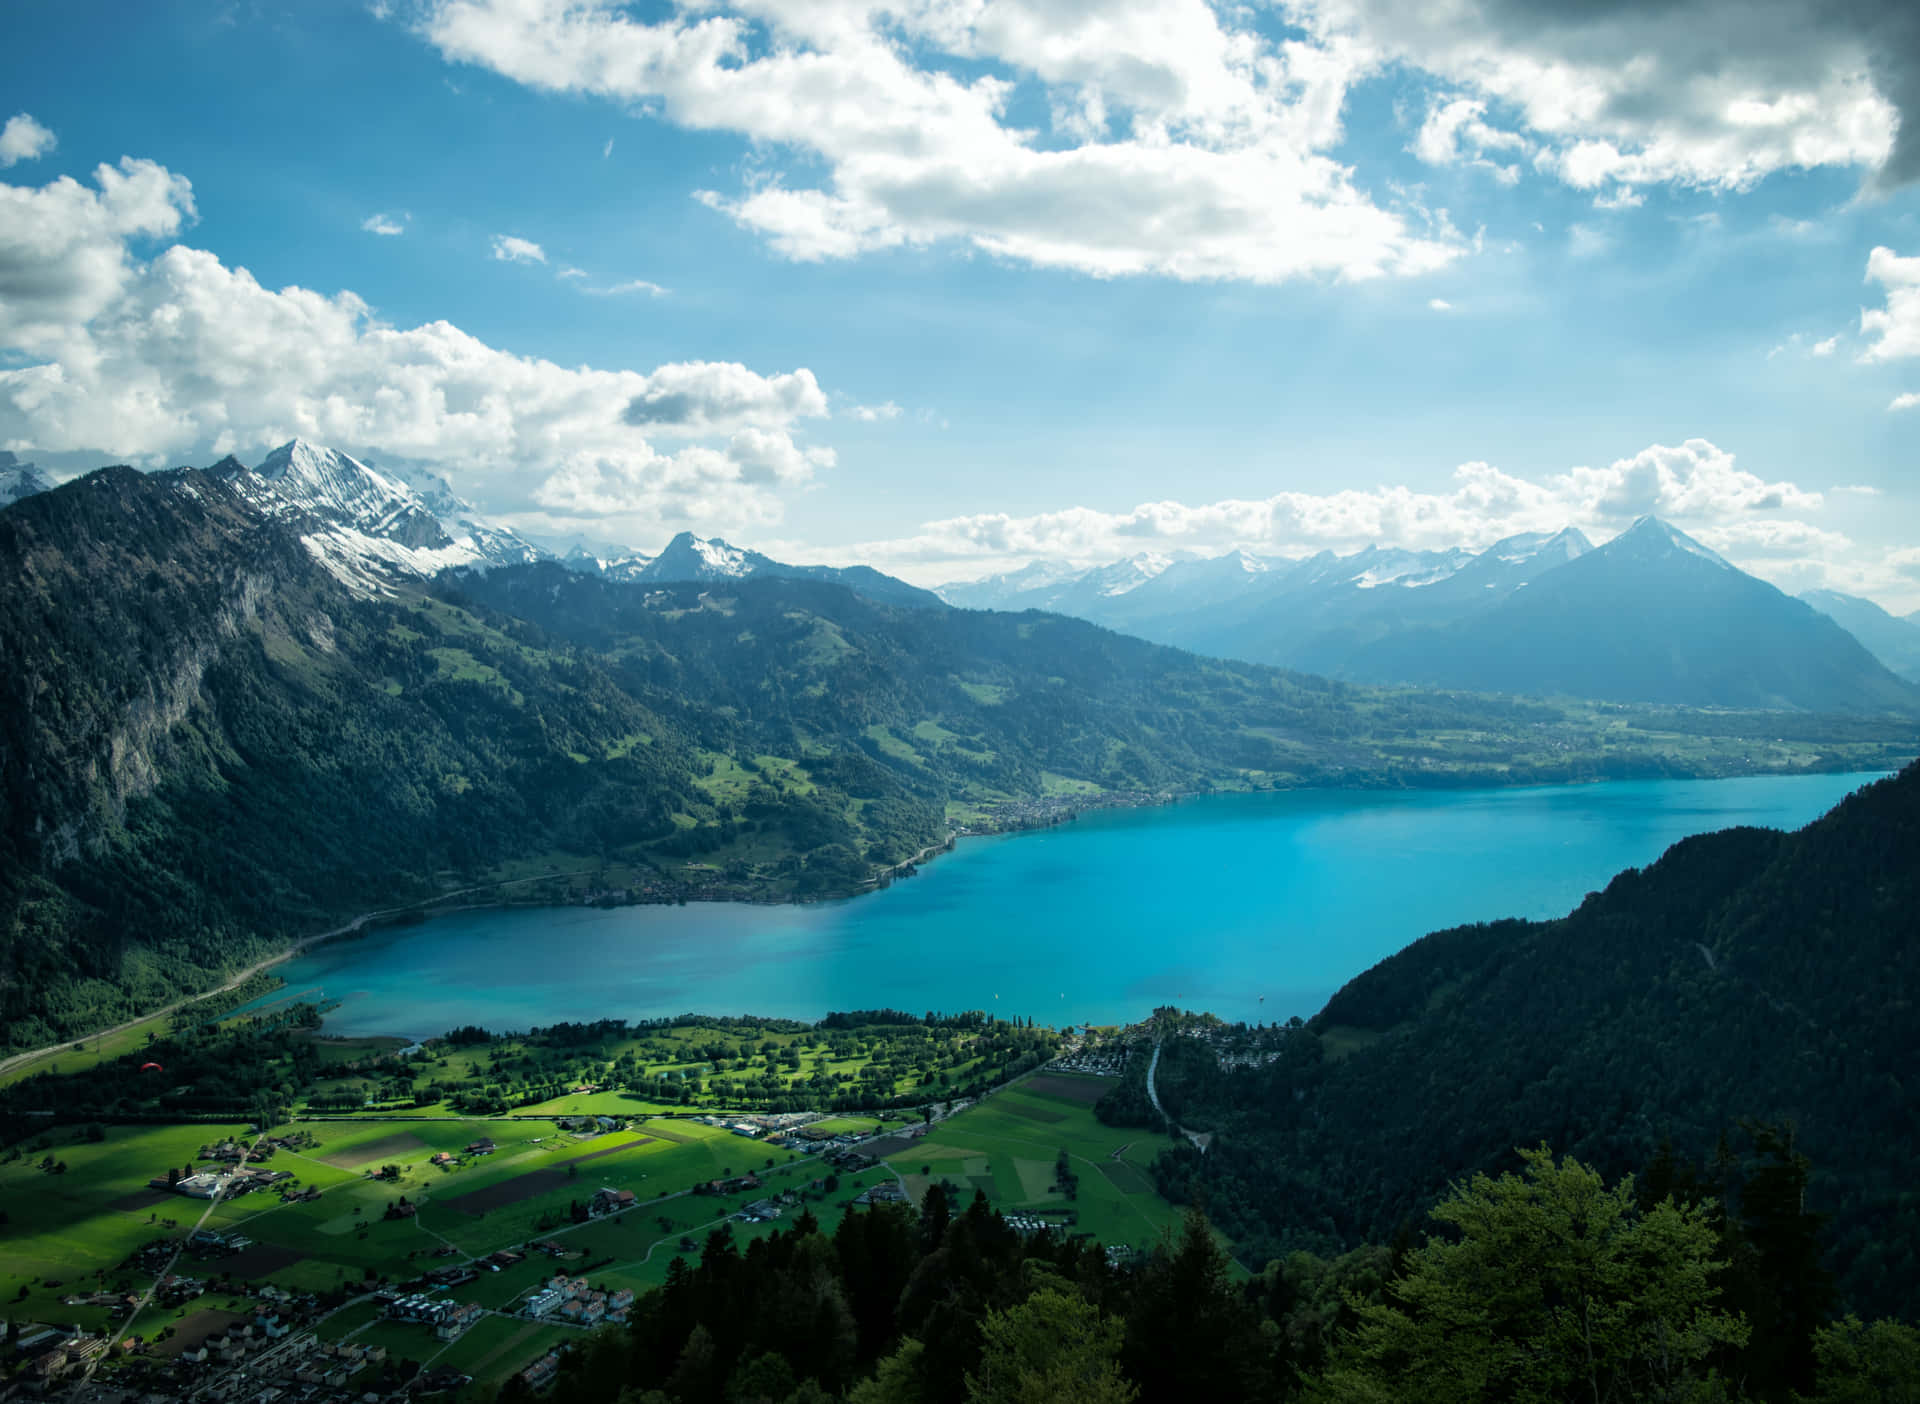 "Take a Breathtaking Journey to a Beautiful Mountain Lake" Wallpaper